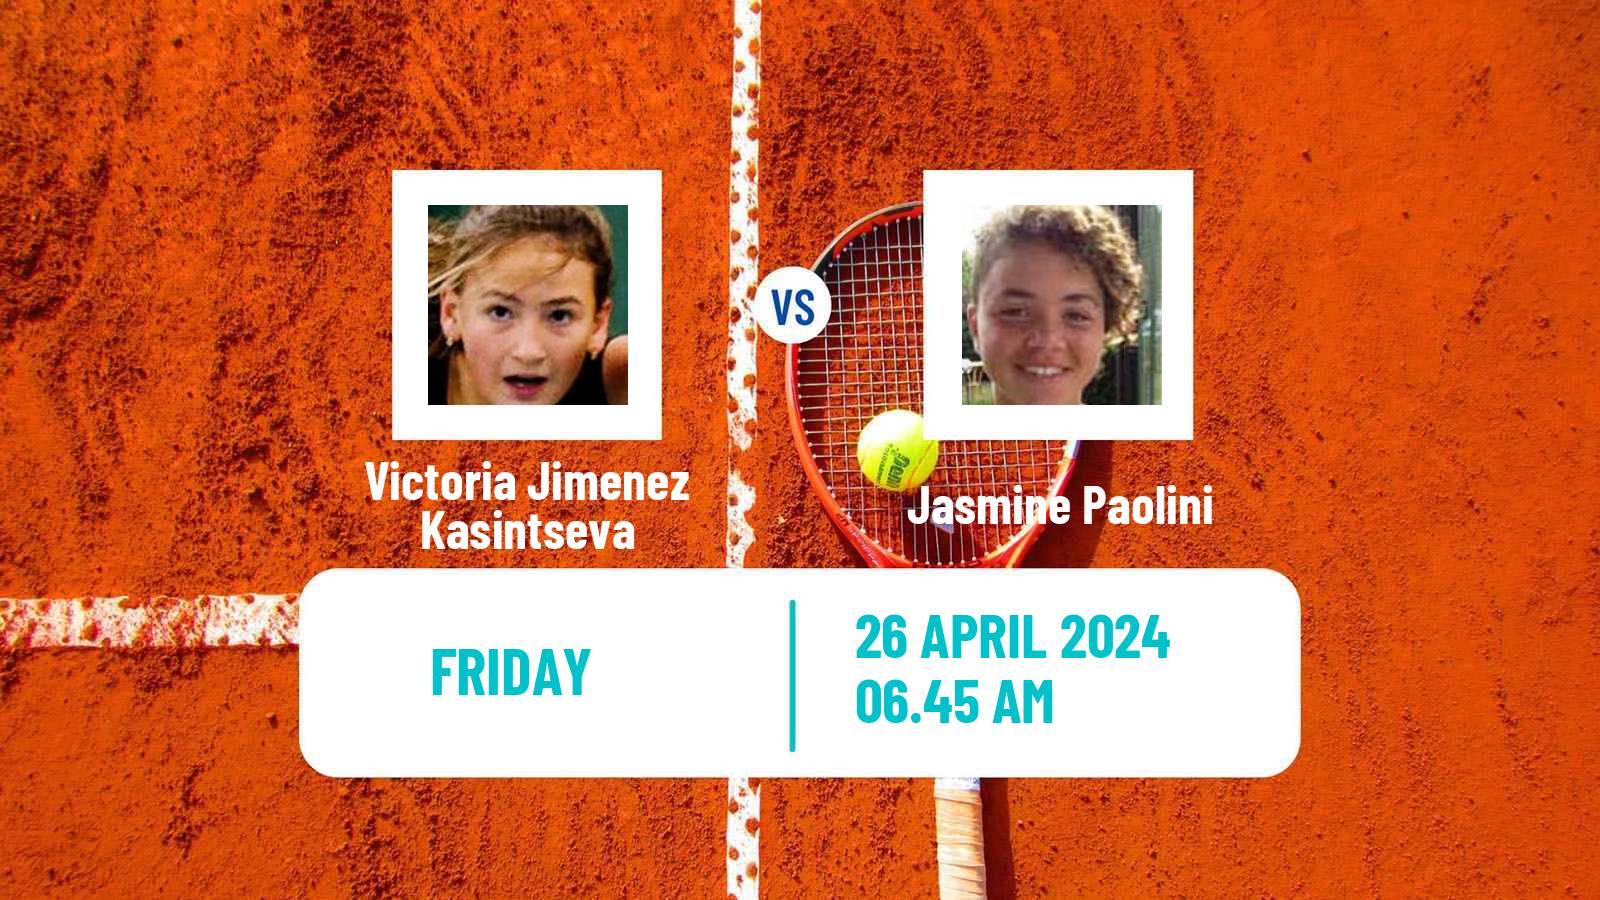 Tennis WTA Madrid Victoria Jimenez Kasintseva - Jasmine Paolini